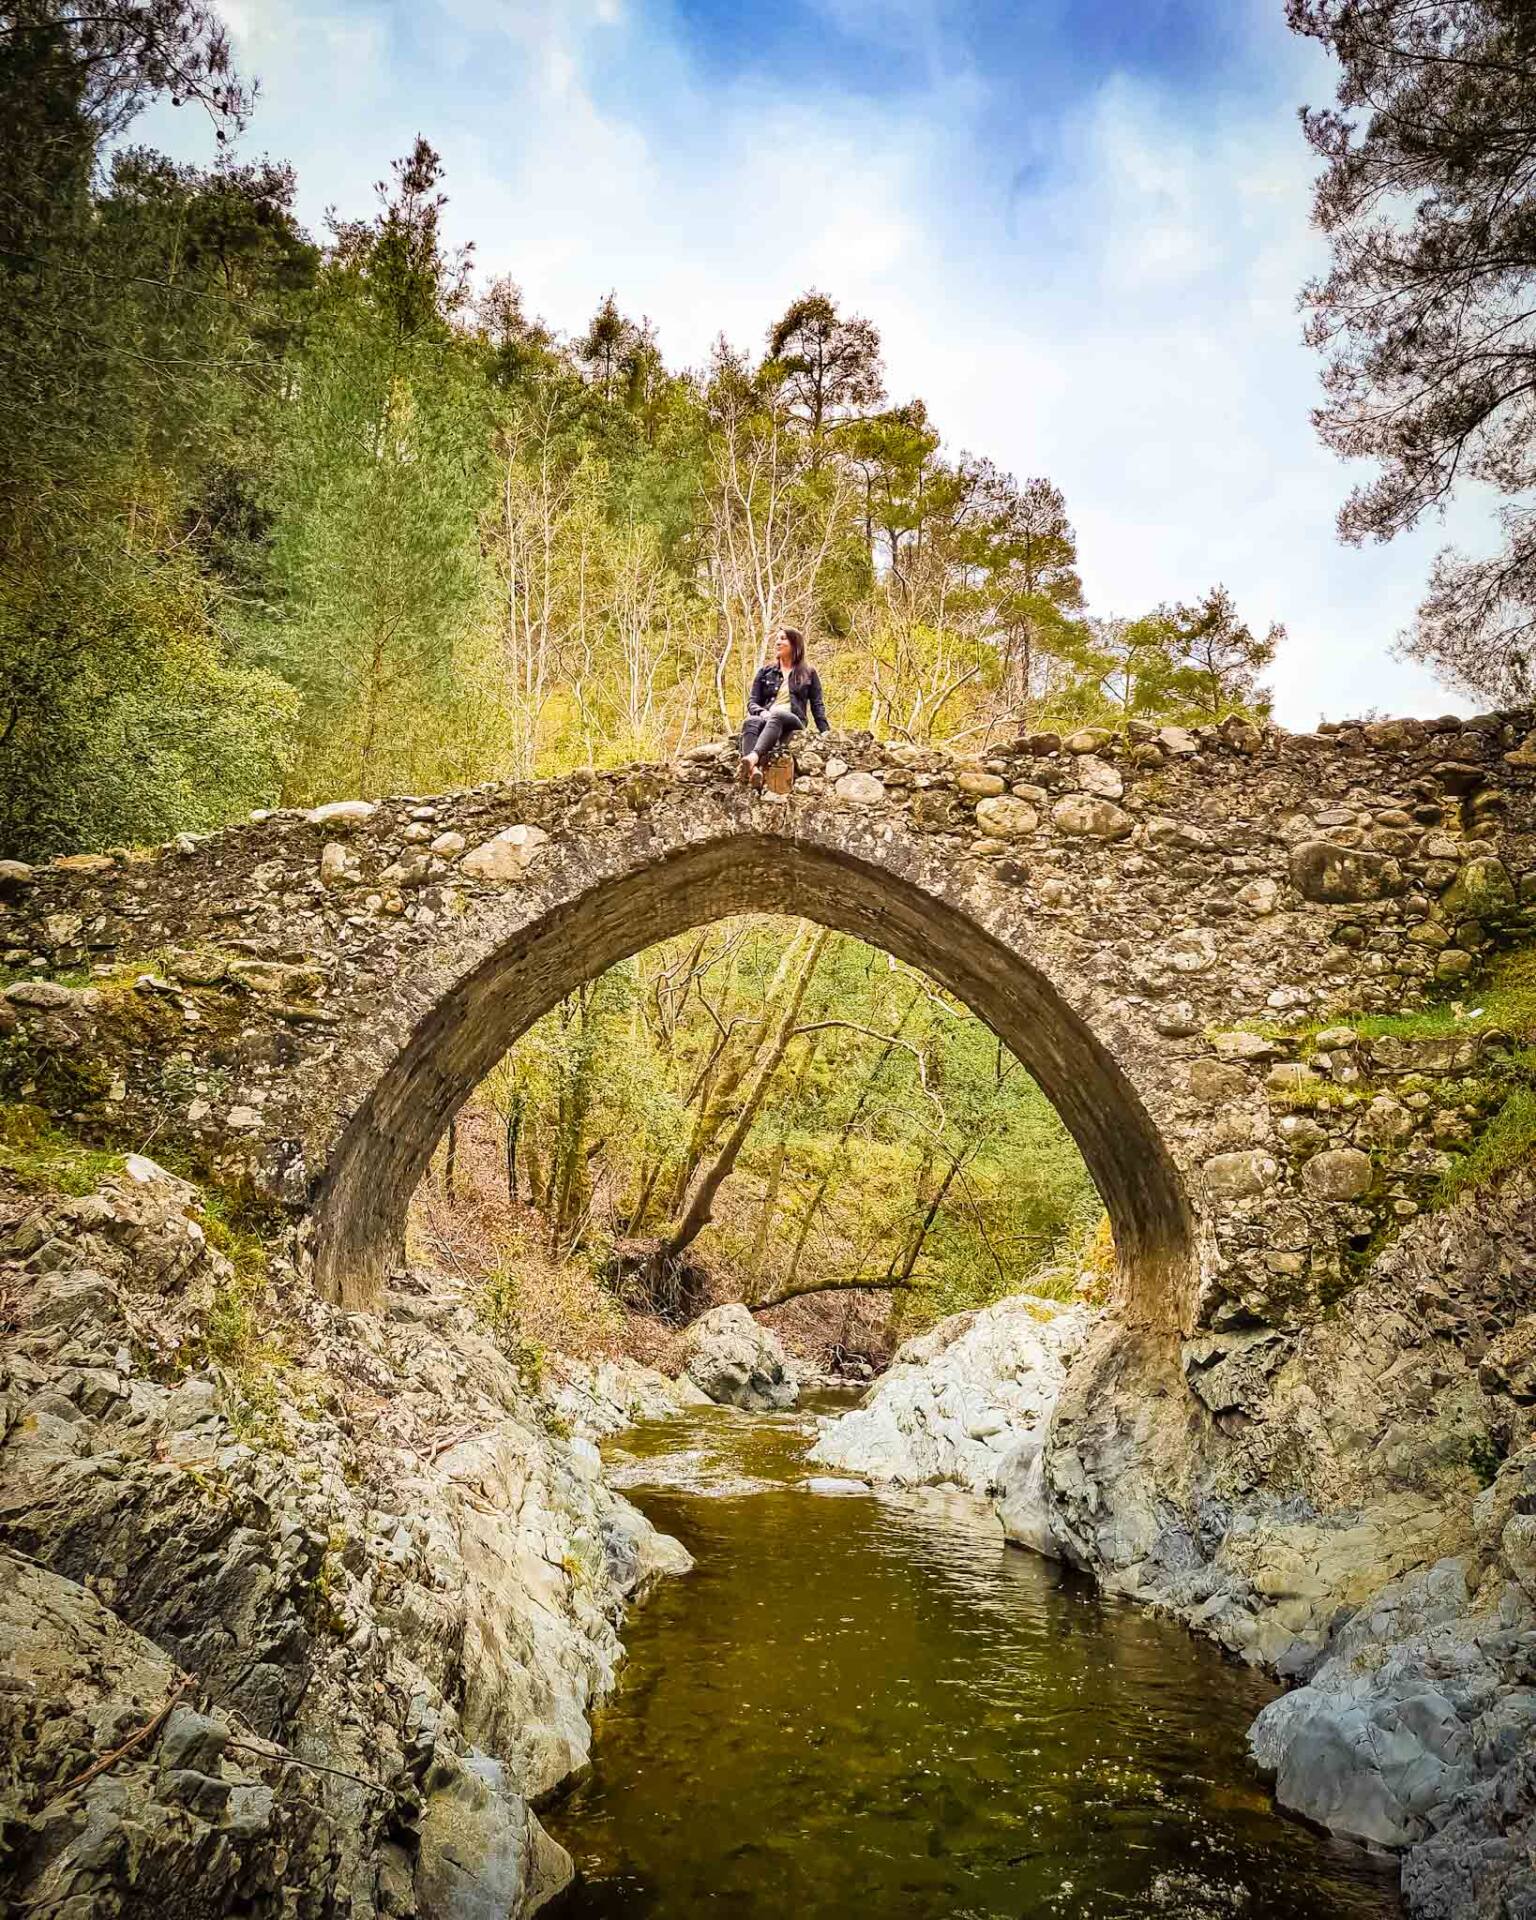 Instagram spots in Cyprus: Venetian bridge in Cyprus